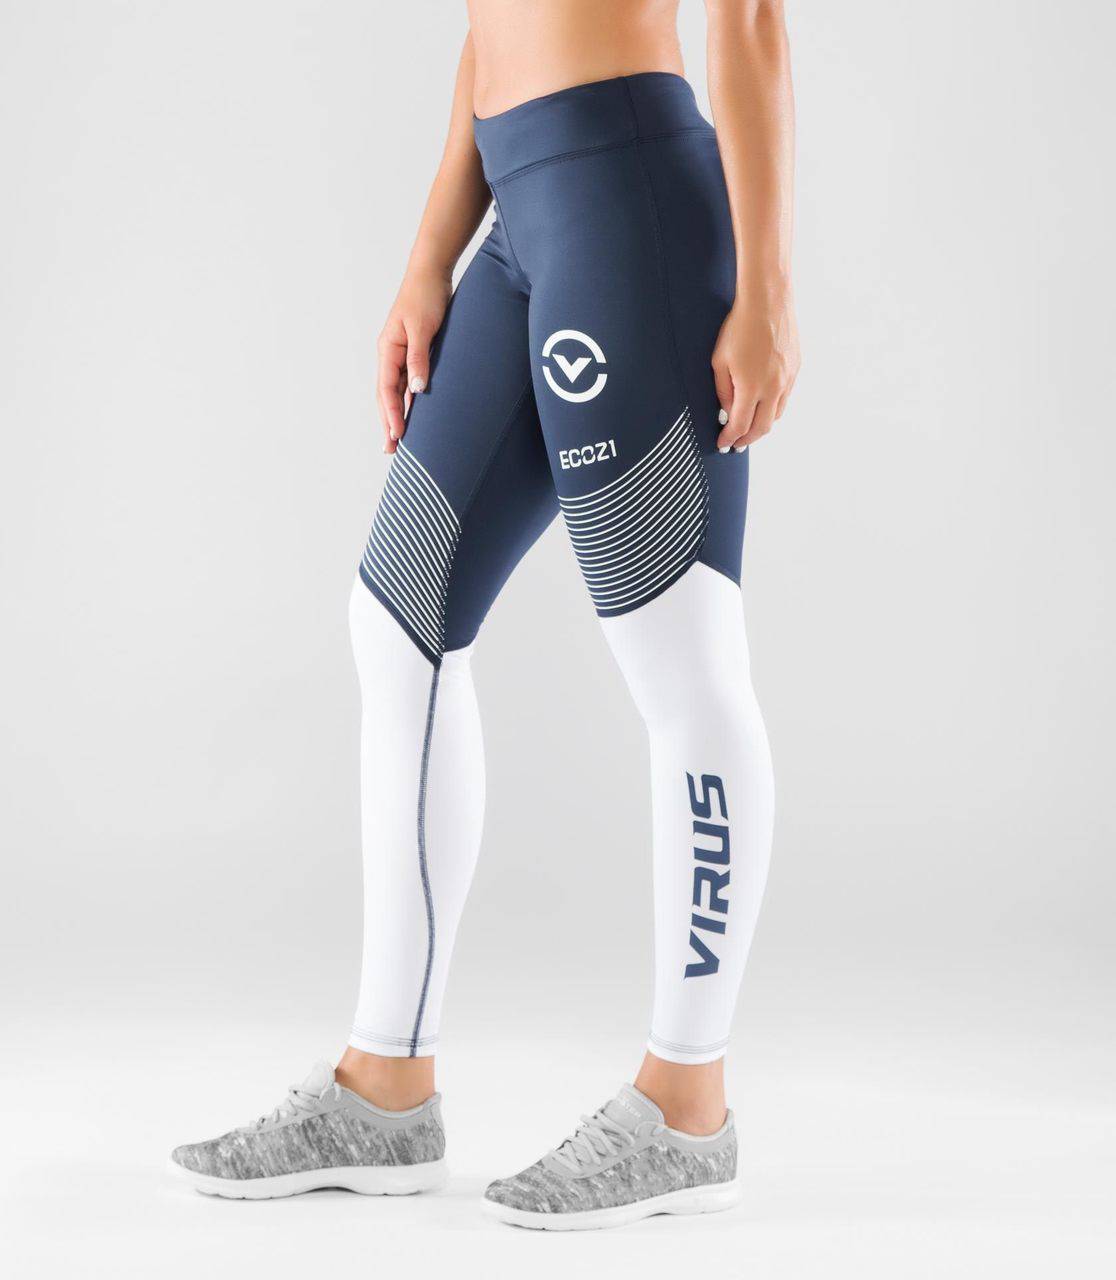 Women's VIRUS Elite Bioceramic Compression Pants Elite Series Action Sport  Small